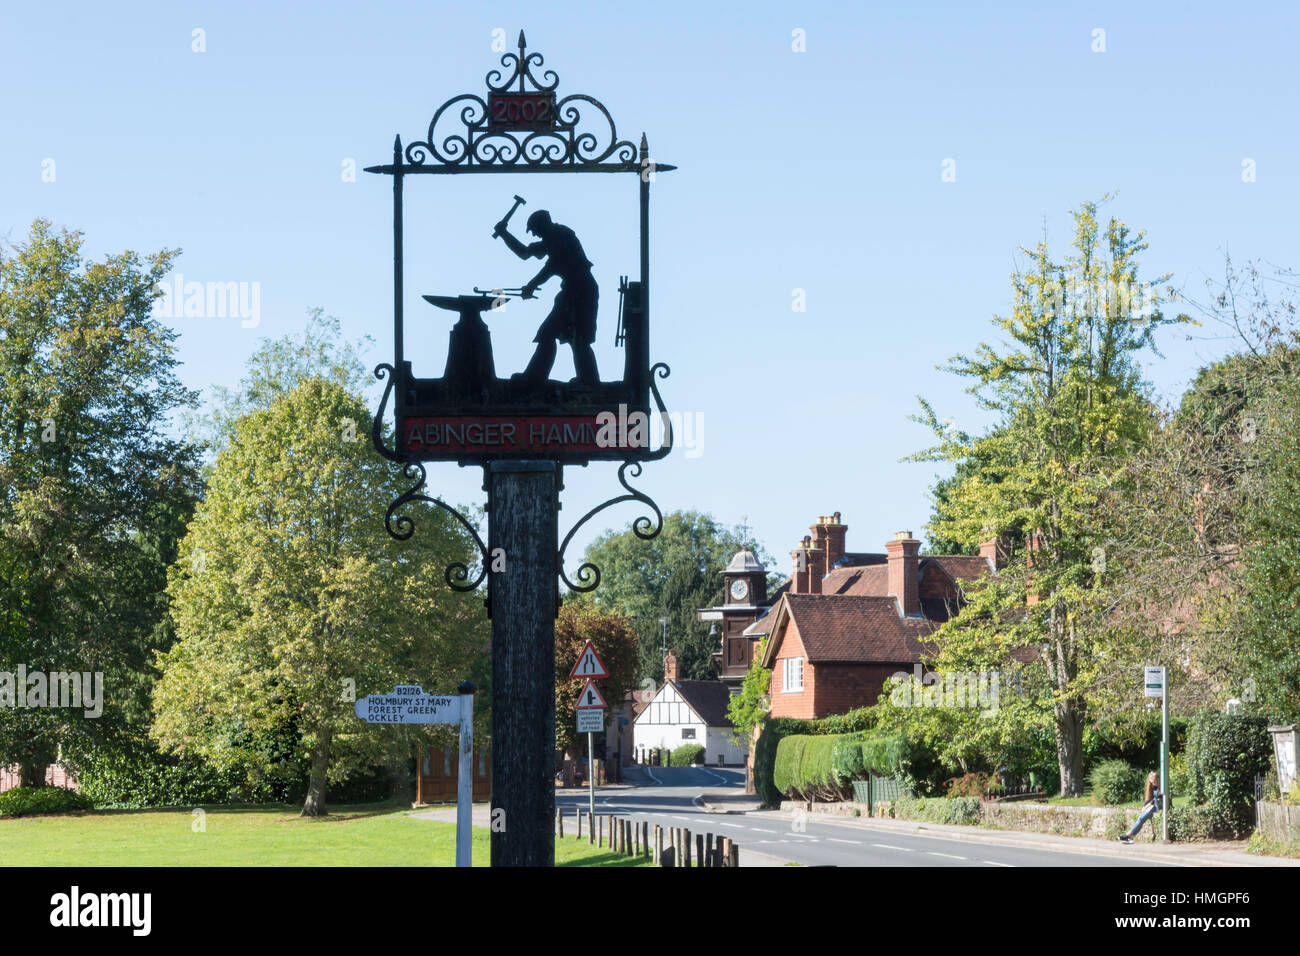 Village sign, Abinger Hammer, Surrey, England, United Kingdom Stock Photo